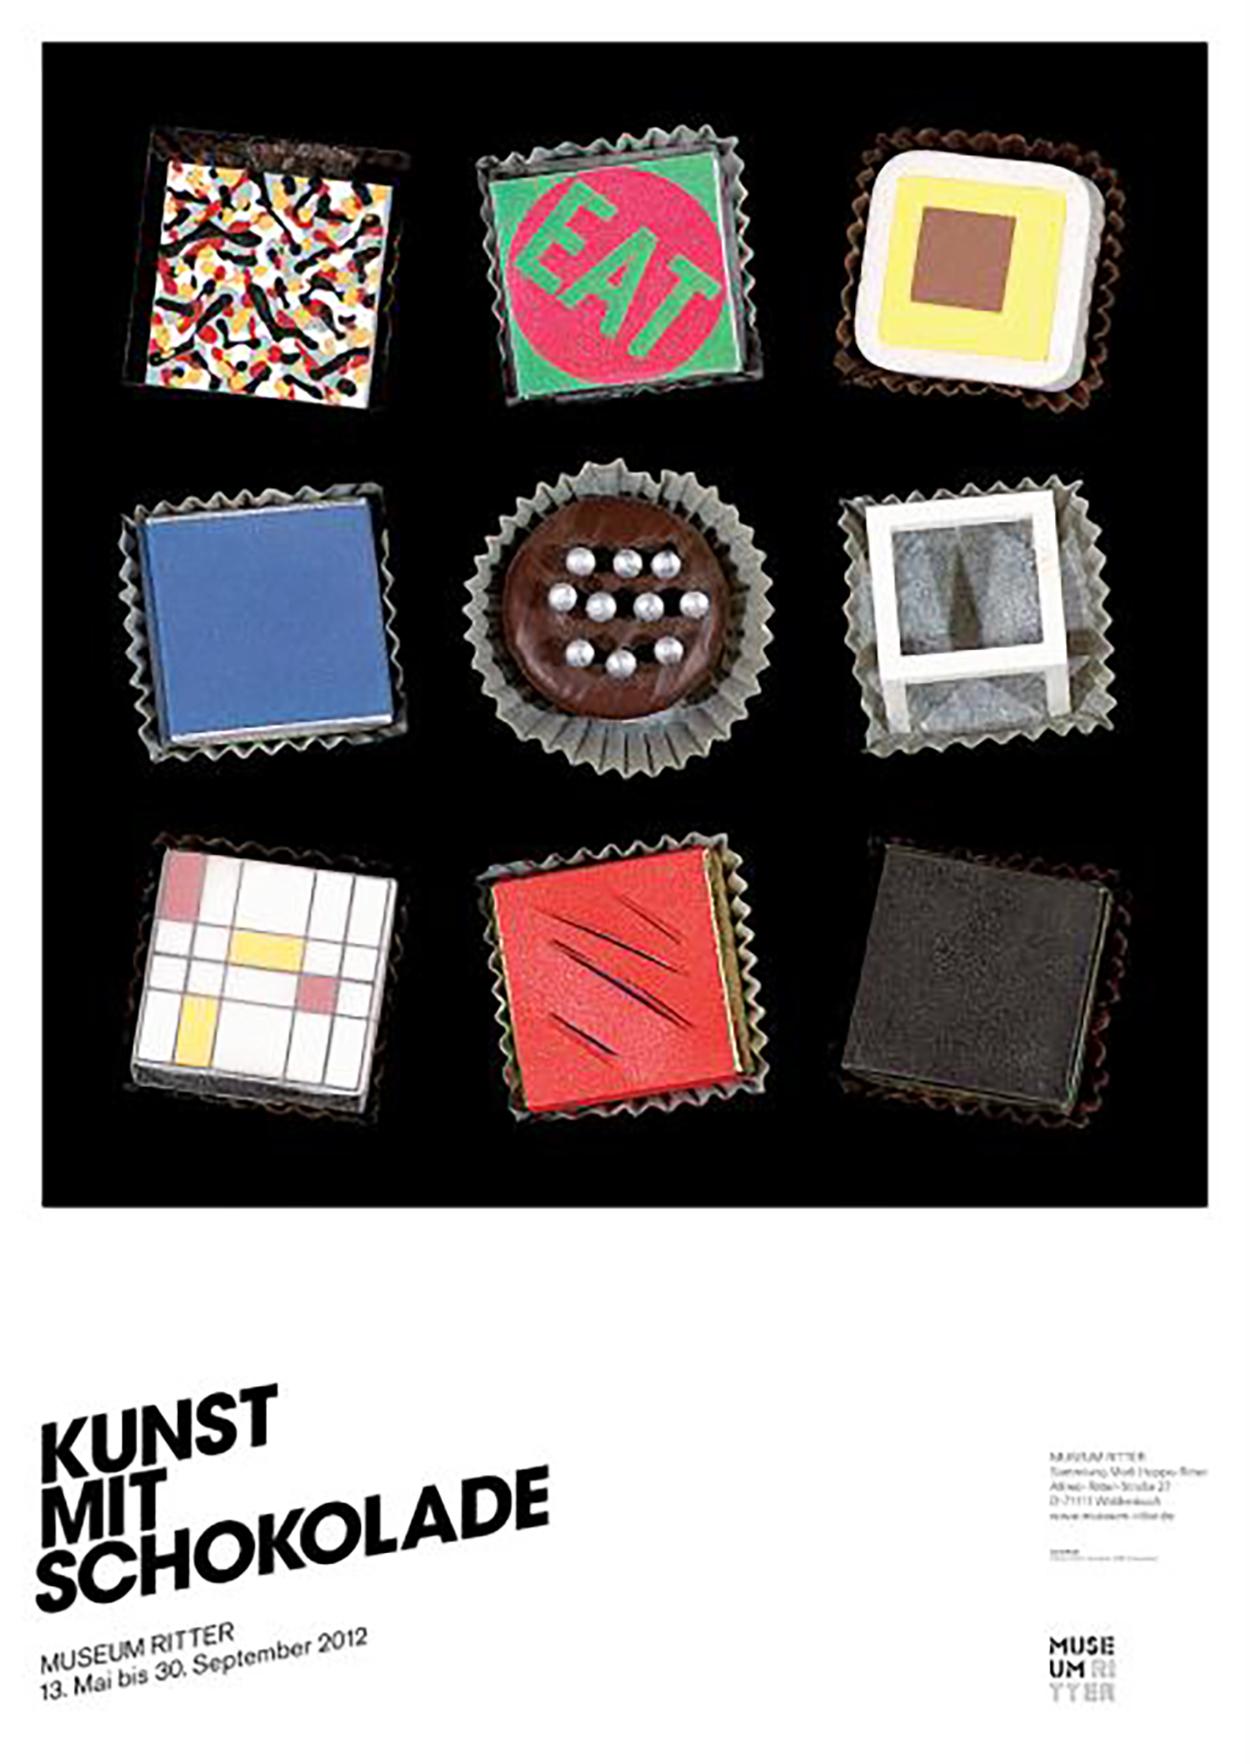 Art with Chocolate - Kunst mit Schokolade - Modrian Klein Indiana Fontana Albers - Print by Unknown